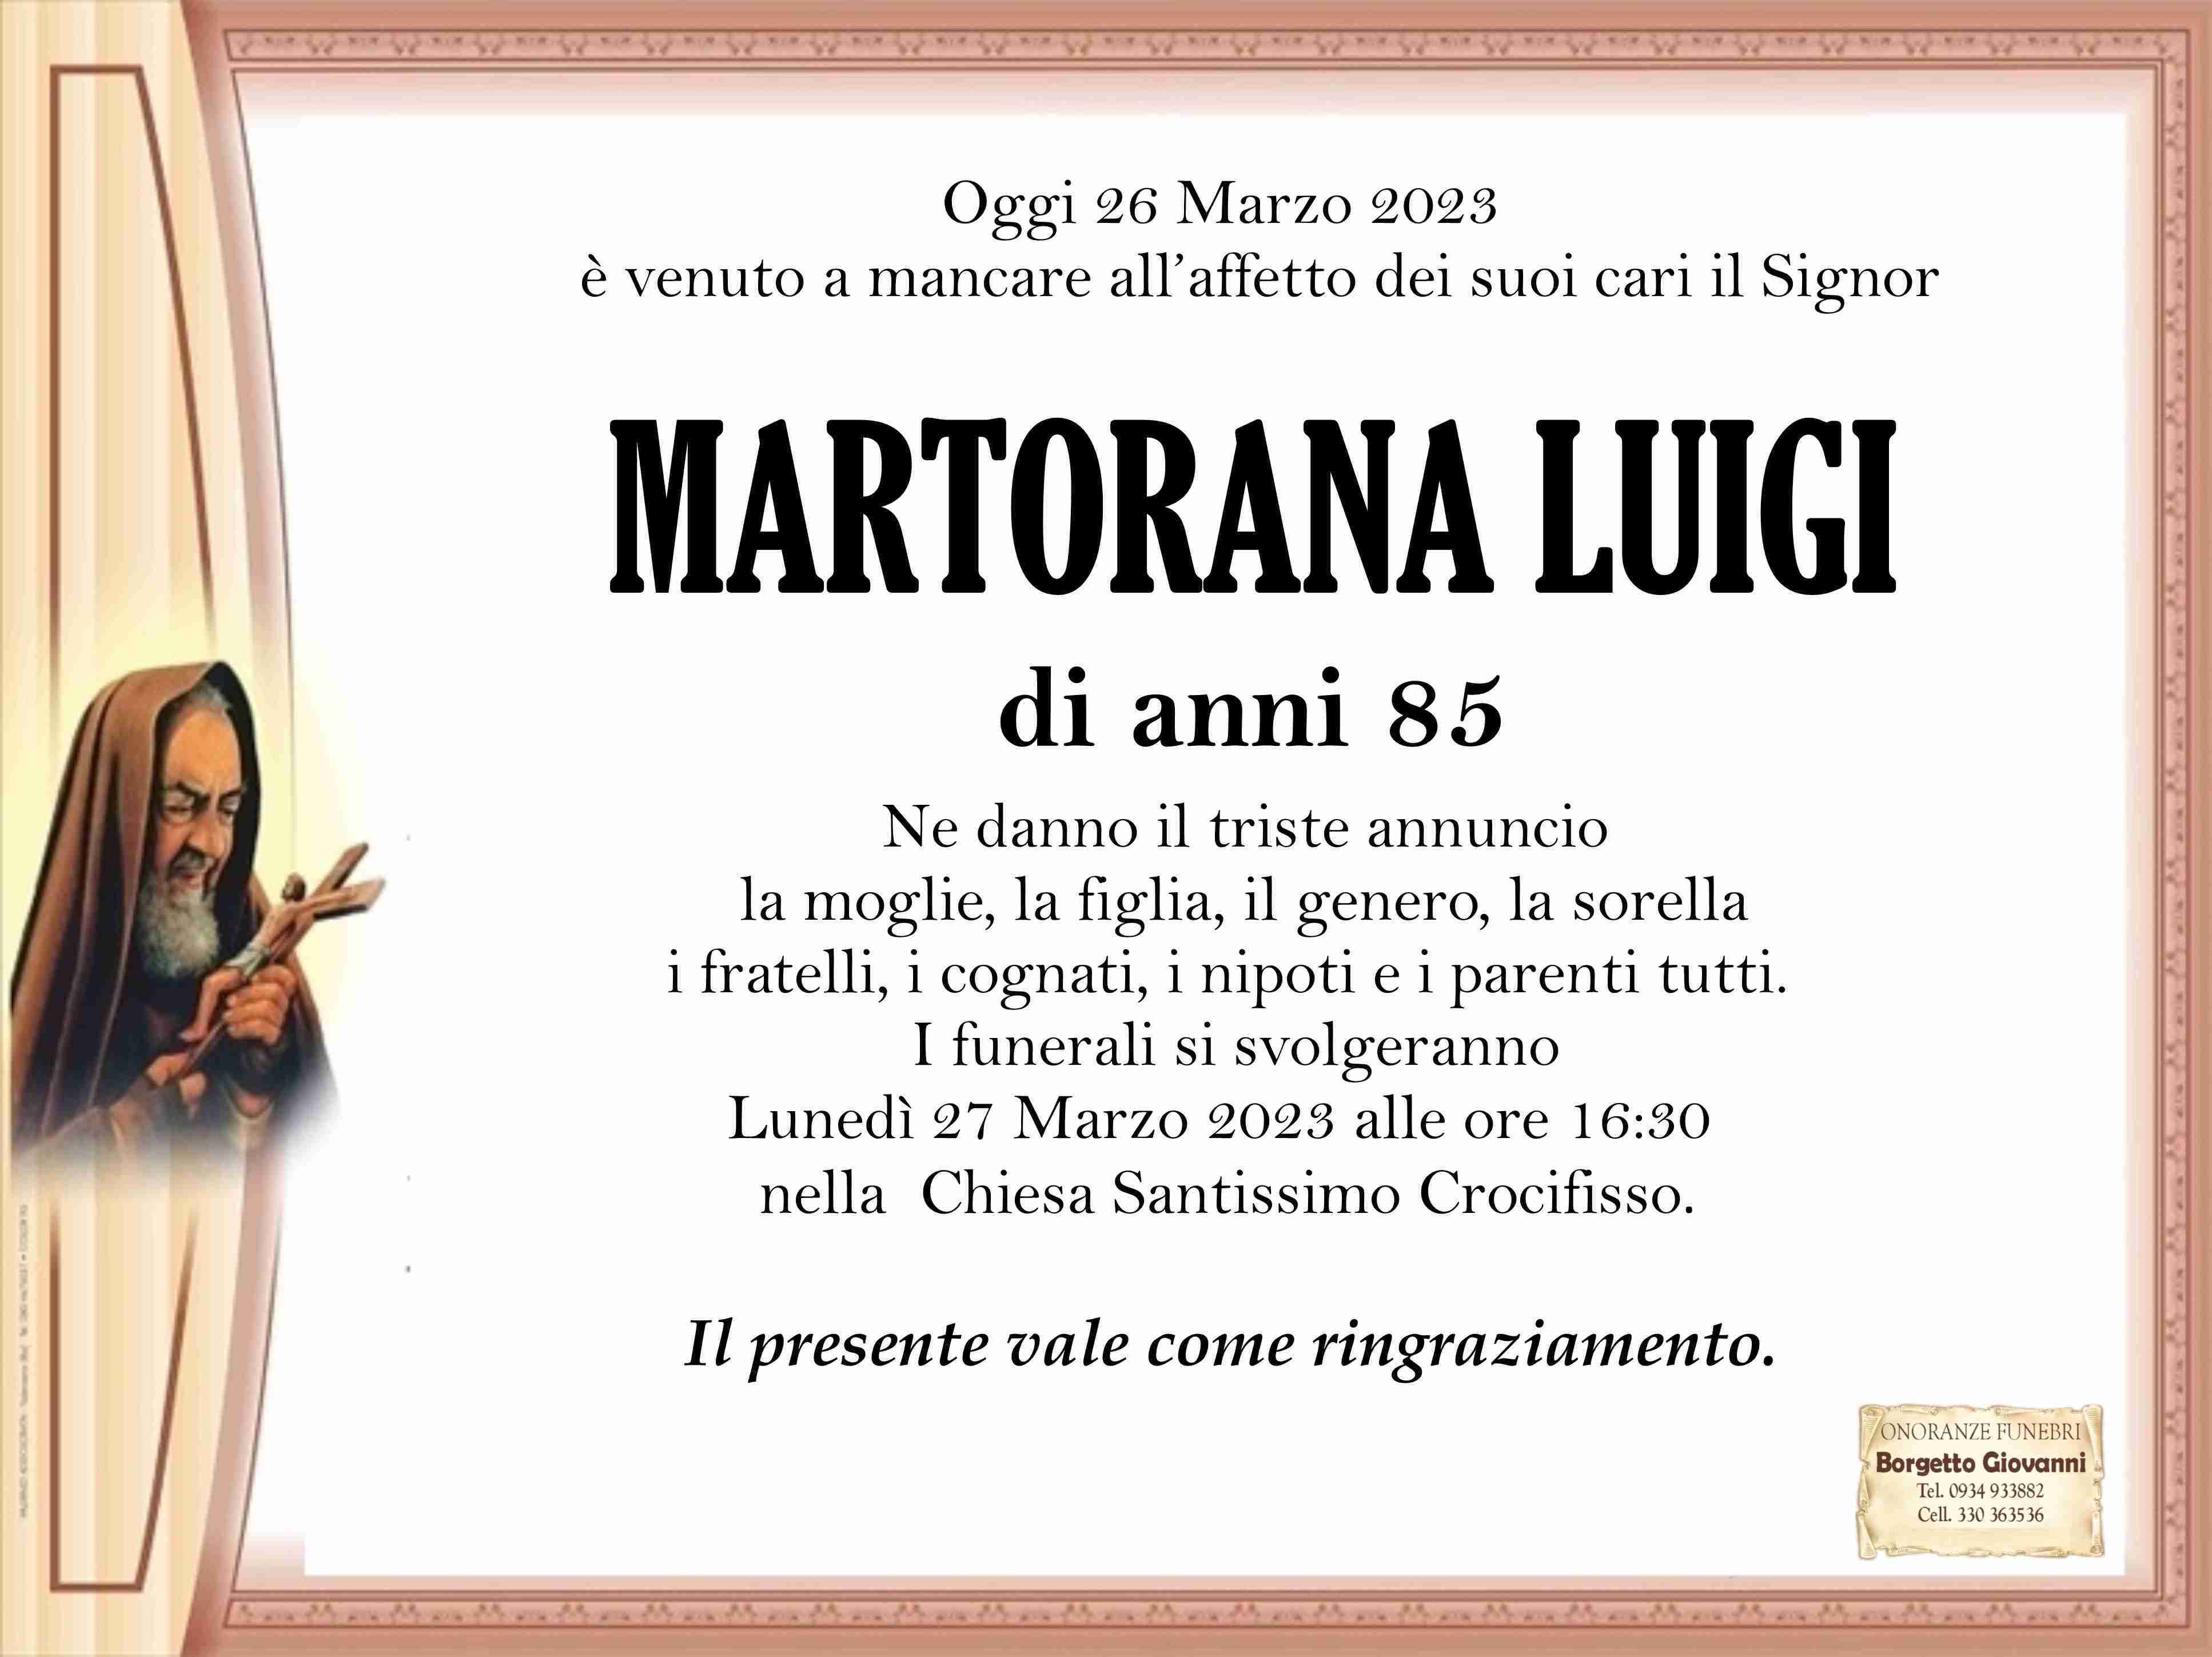 Luigi Martorana